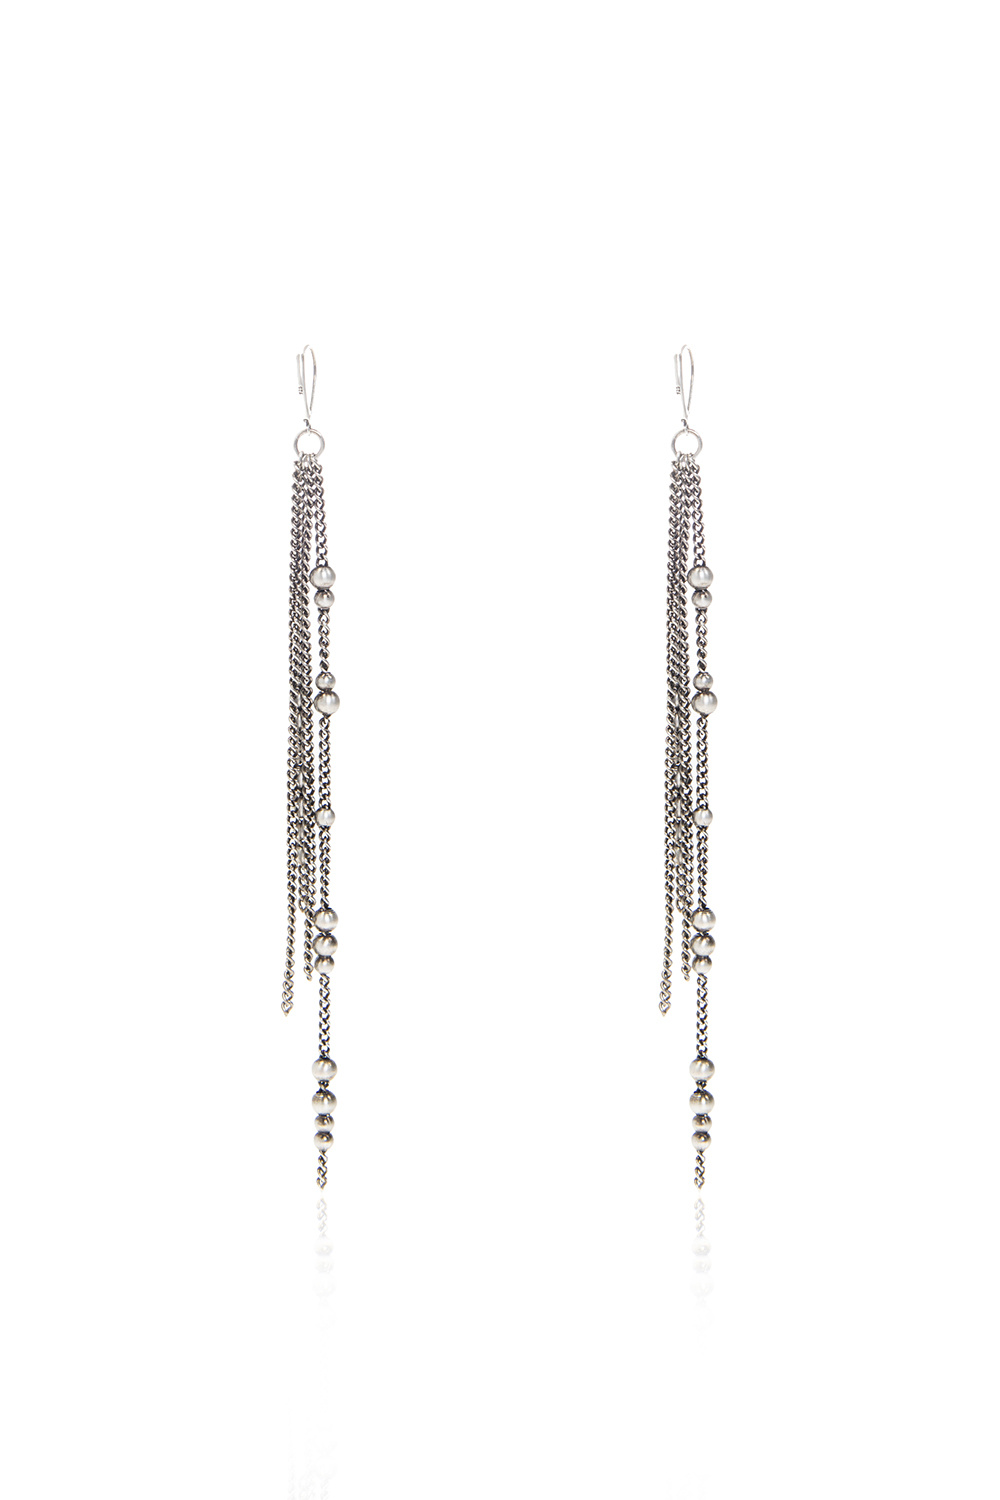 Ann Demeulemeester ‘Danique’ silver earrings